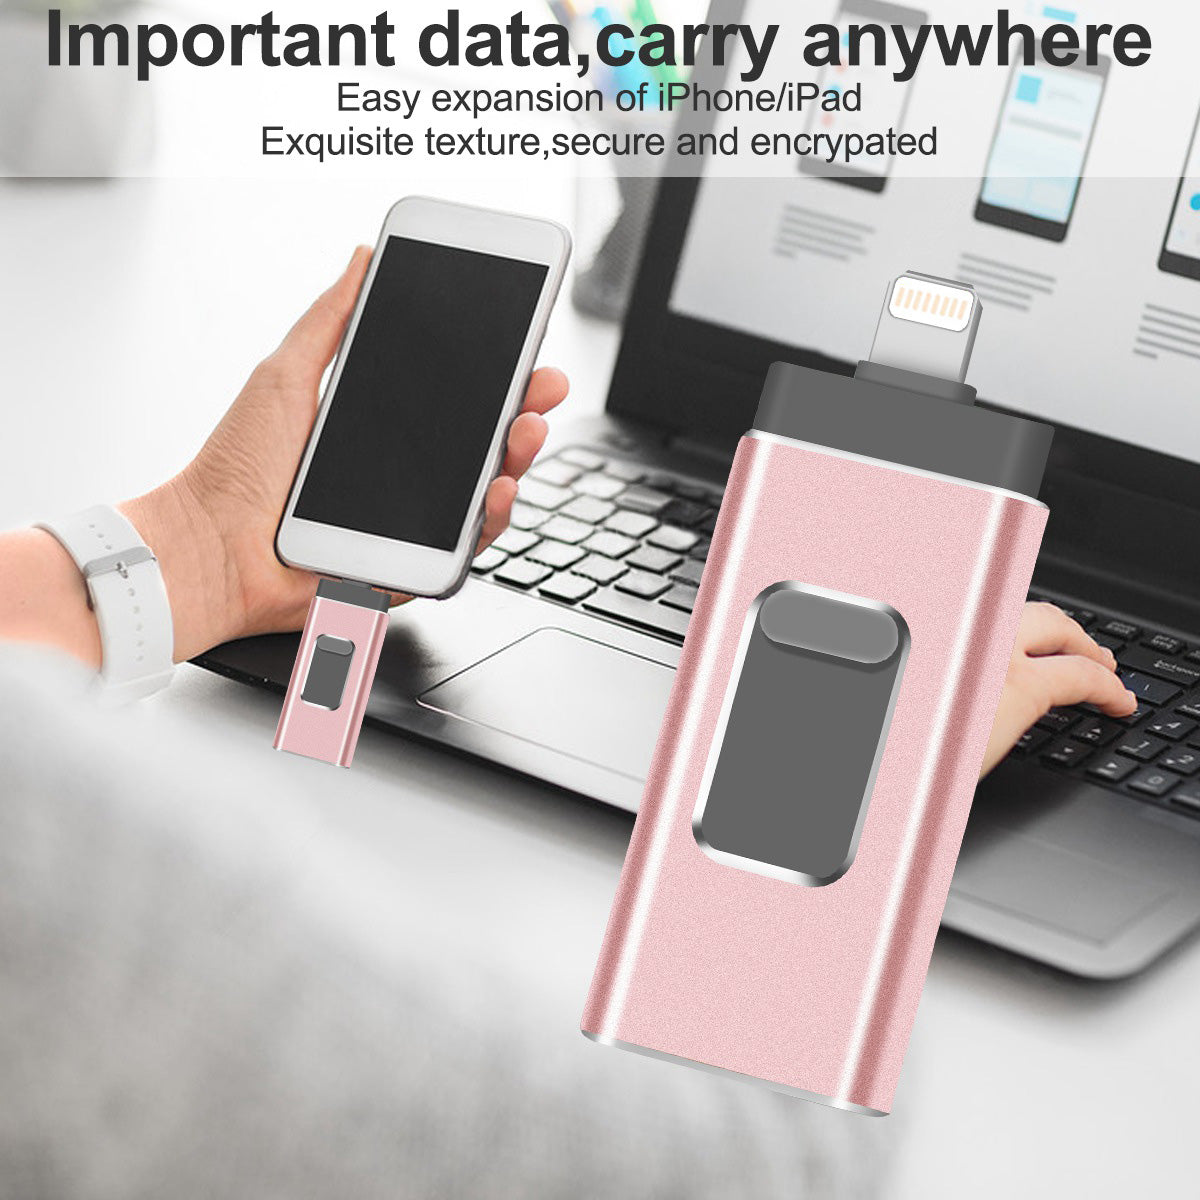 Uniqkart R-01B 32GB USB Memory Stick for iPhone Android PC, Portable USB 3.0 Flash Drive Thumb Drive Photo Stick - Pink